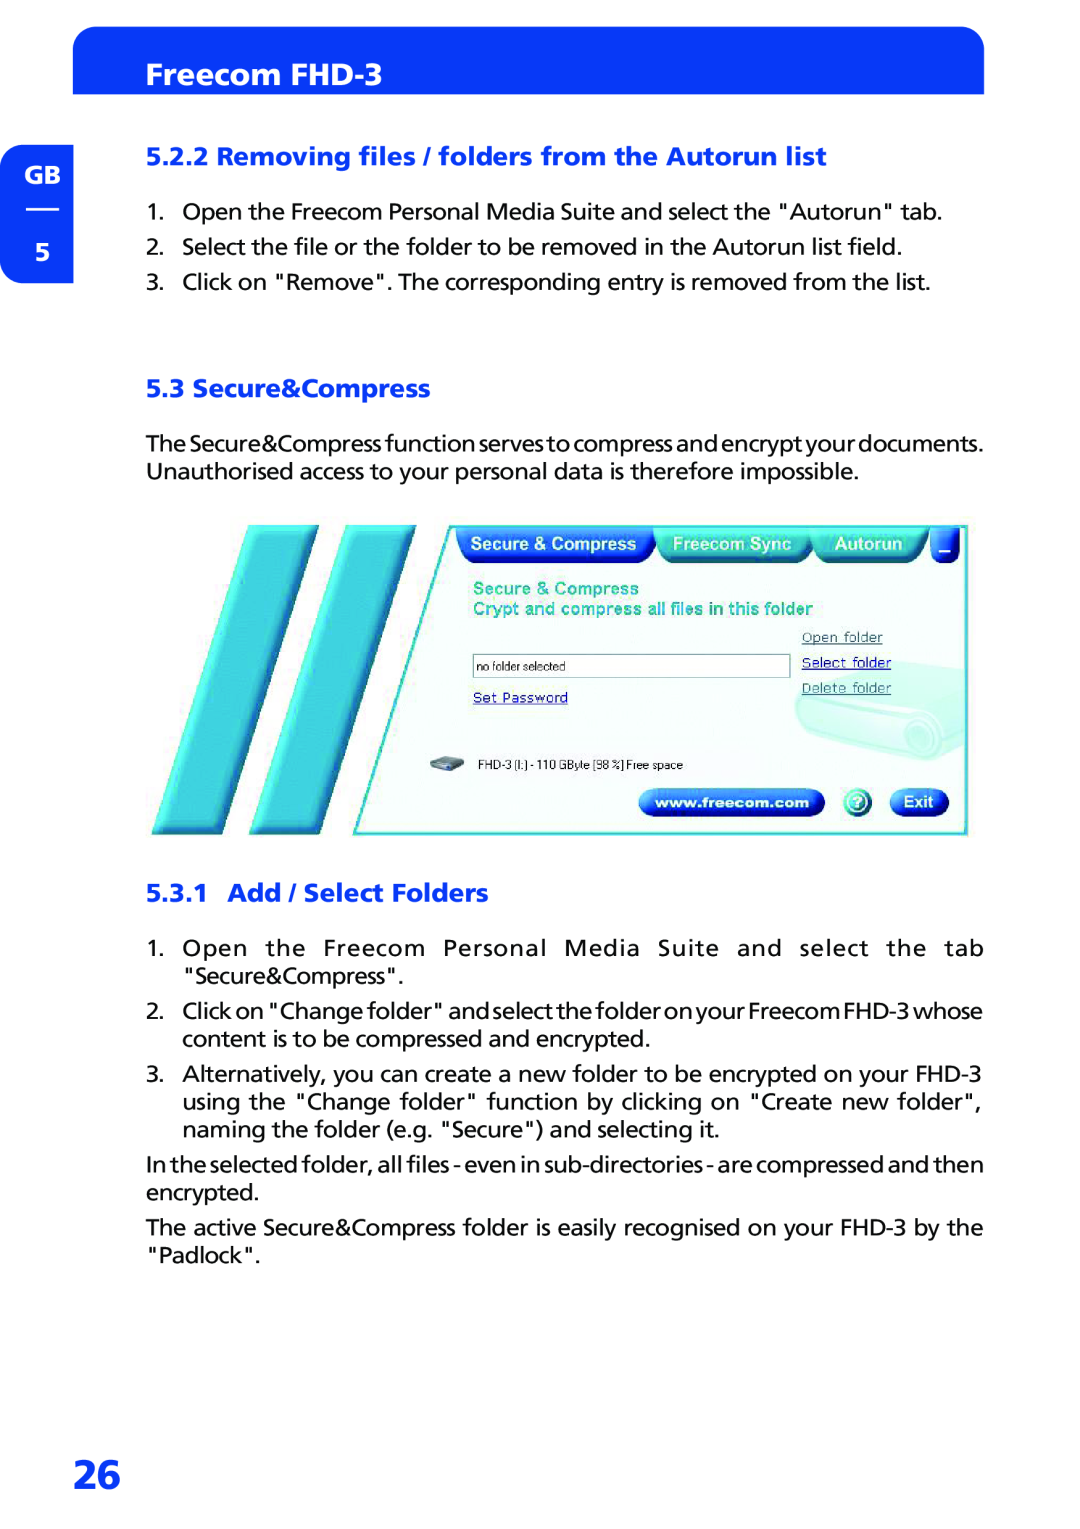 Freecom Technologies FHD-3 manual Removing files / folders from the Autorun list, Secure&Compress, Add / Select Folders 